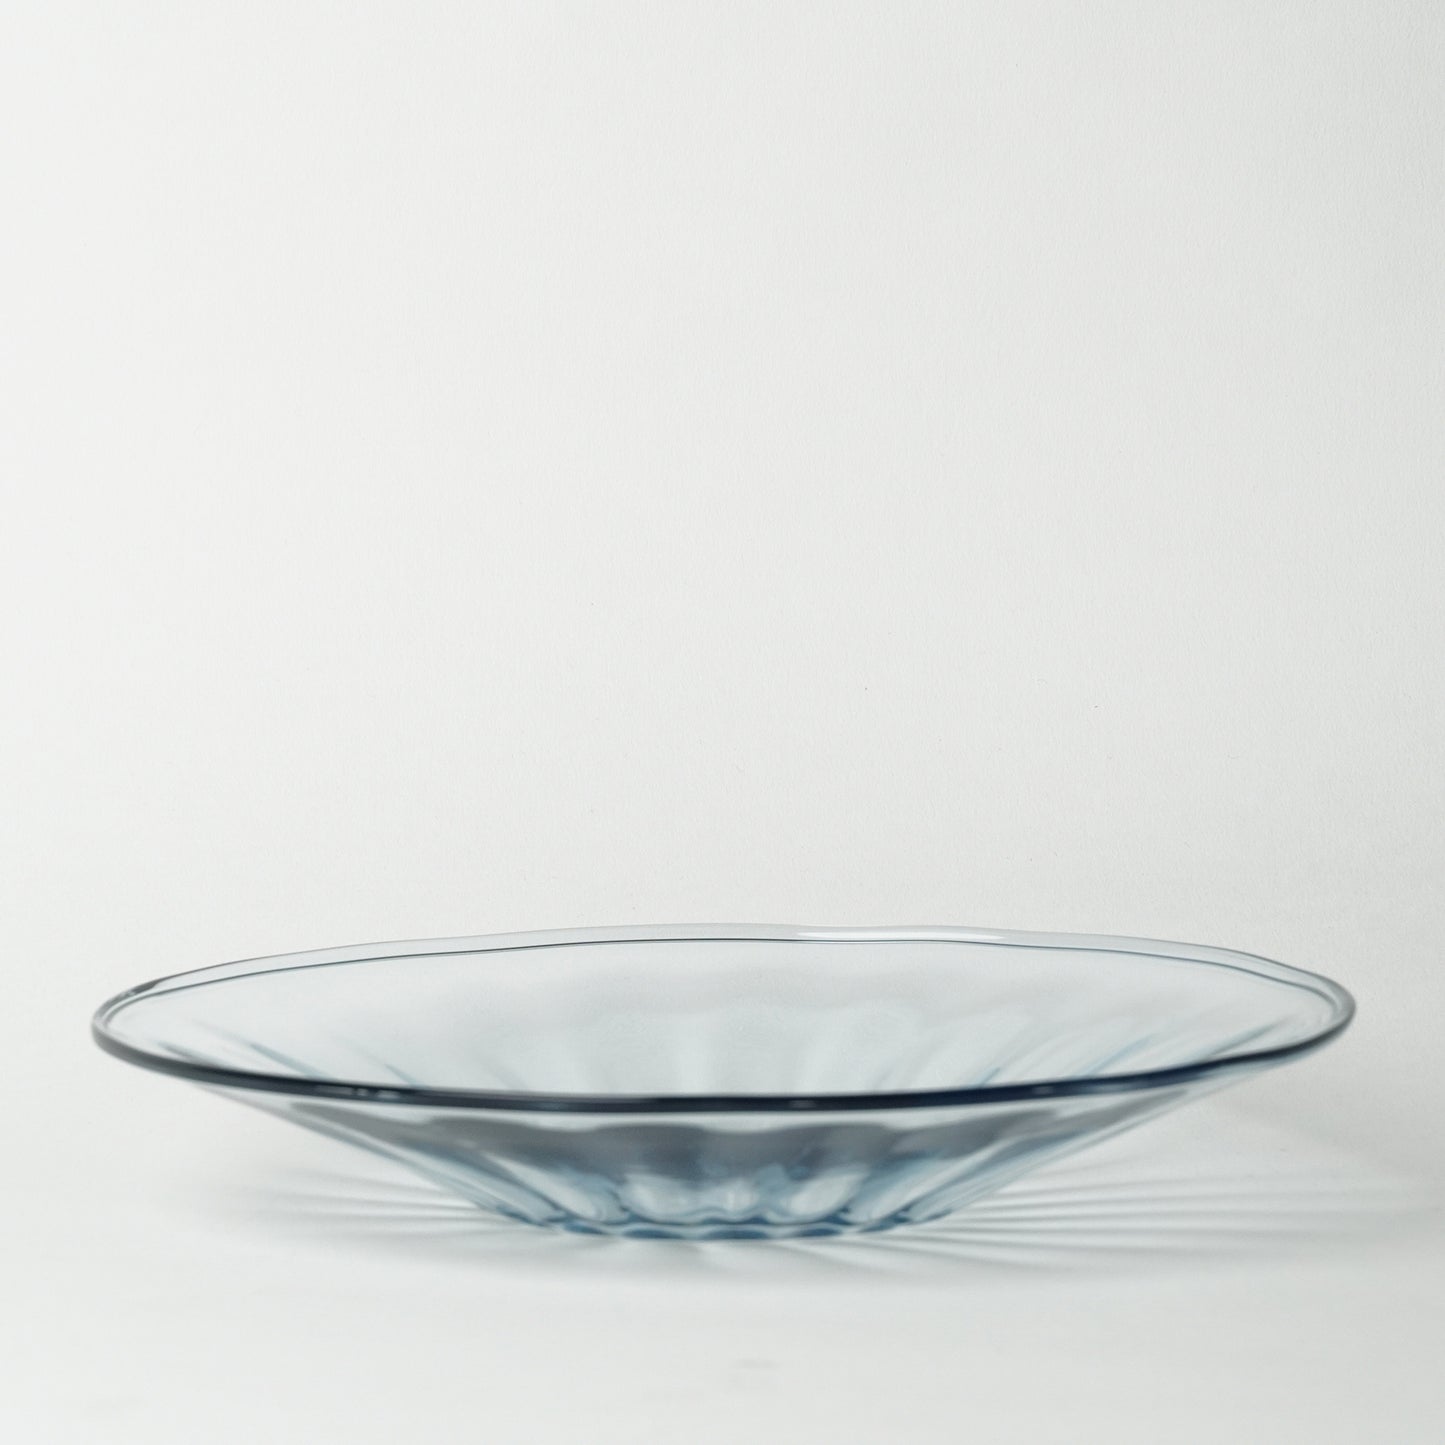 Hiroy Glass Studio Glass Plate Grice Series